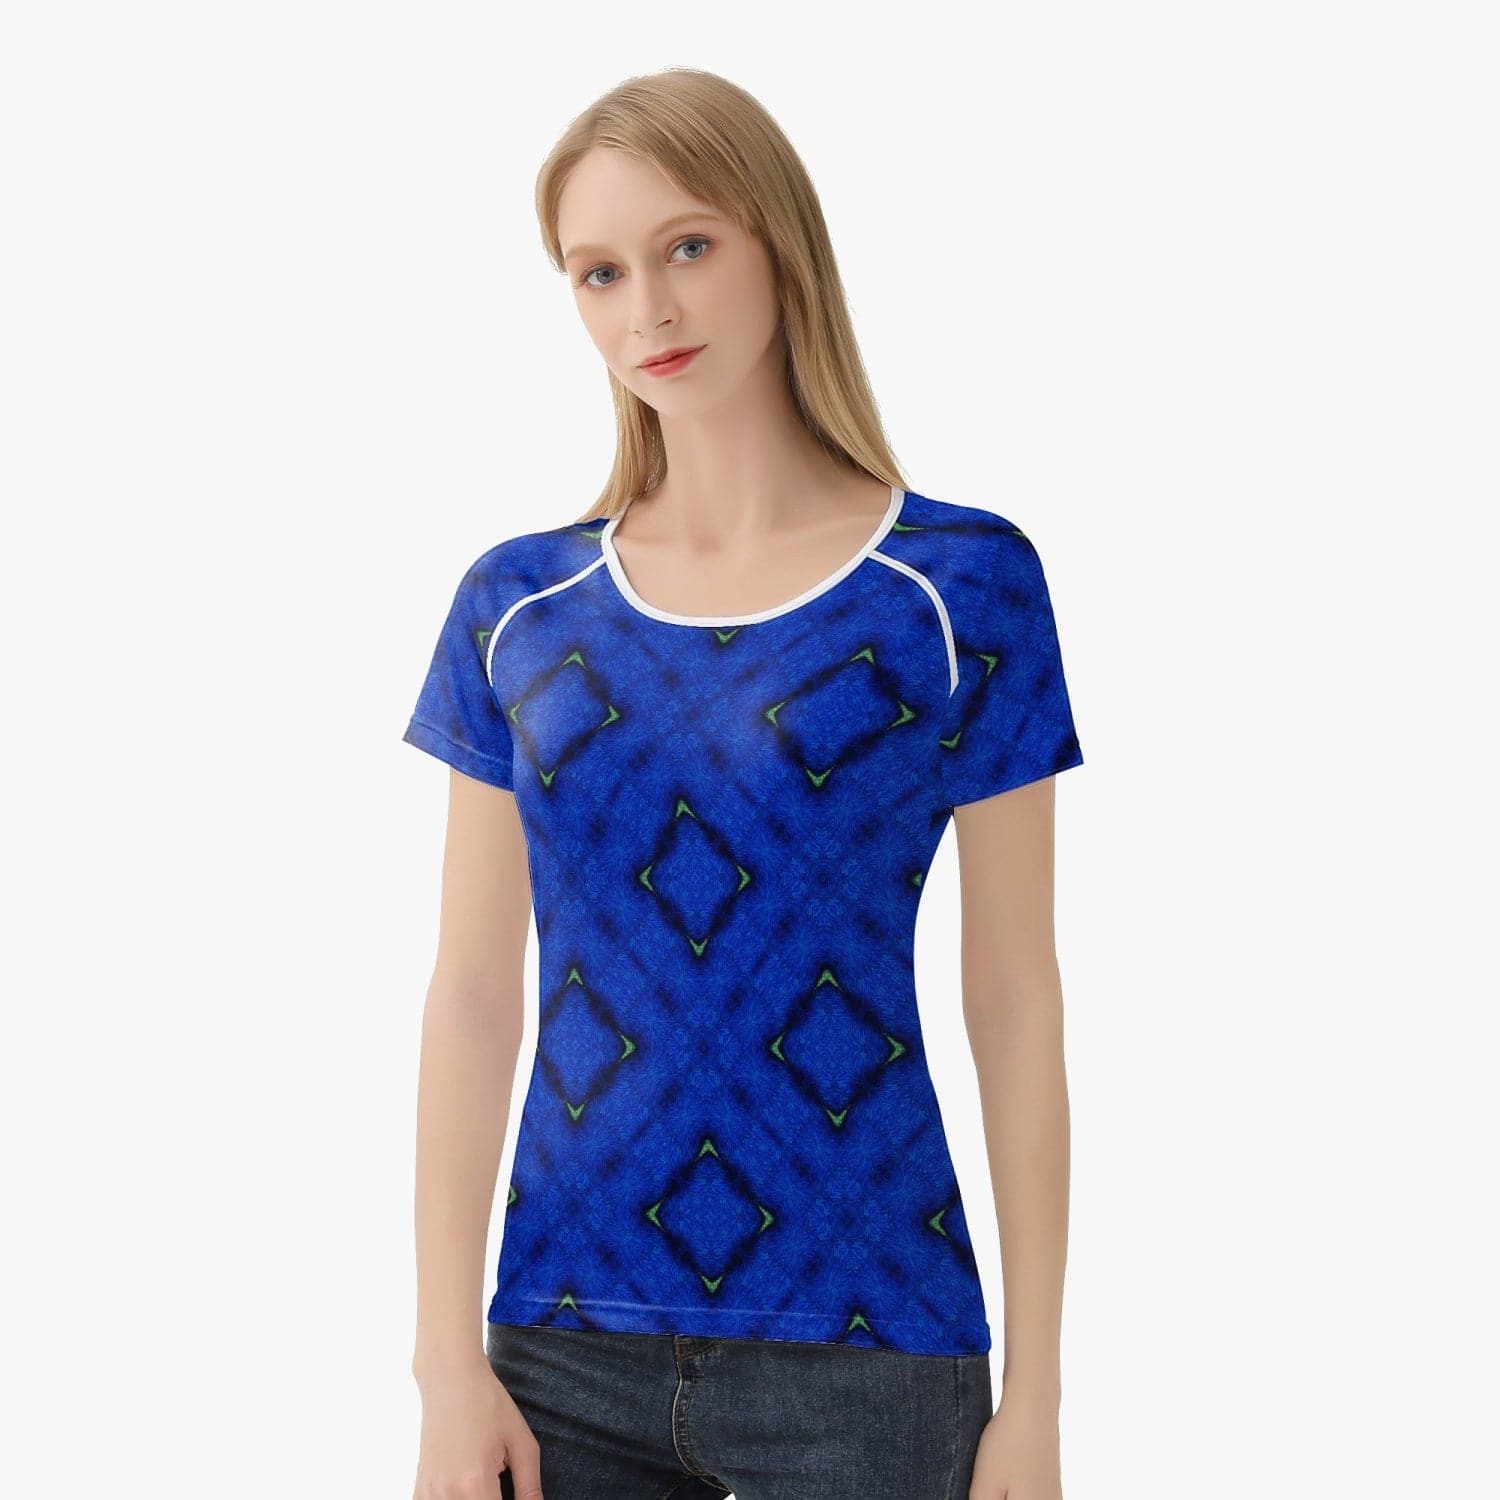 Indigo Third Eye Chacra Handmade Yoga Top for Women sports T-shirt, by Sensus Studio Design